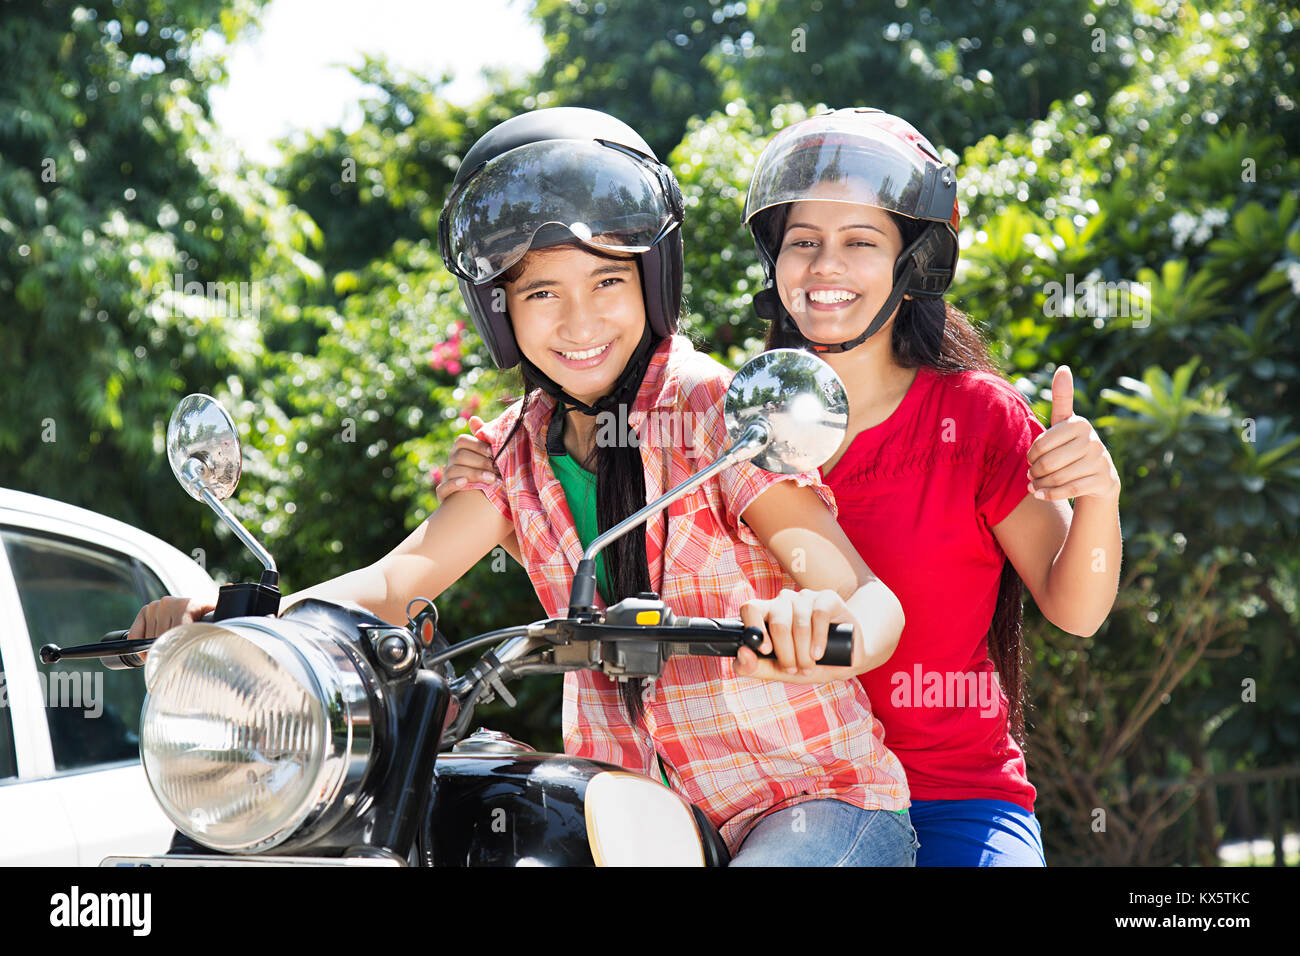 2 Indian Young Girls Friend Ride Bullet Bike Fun Cheerful Stock Photo